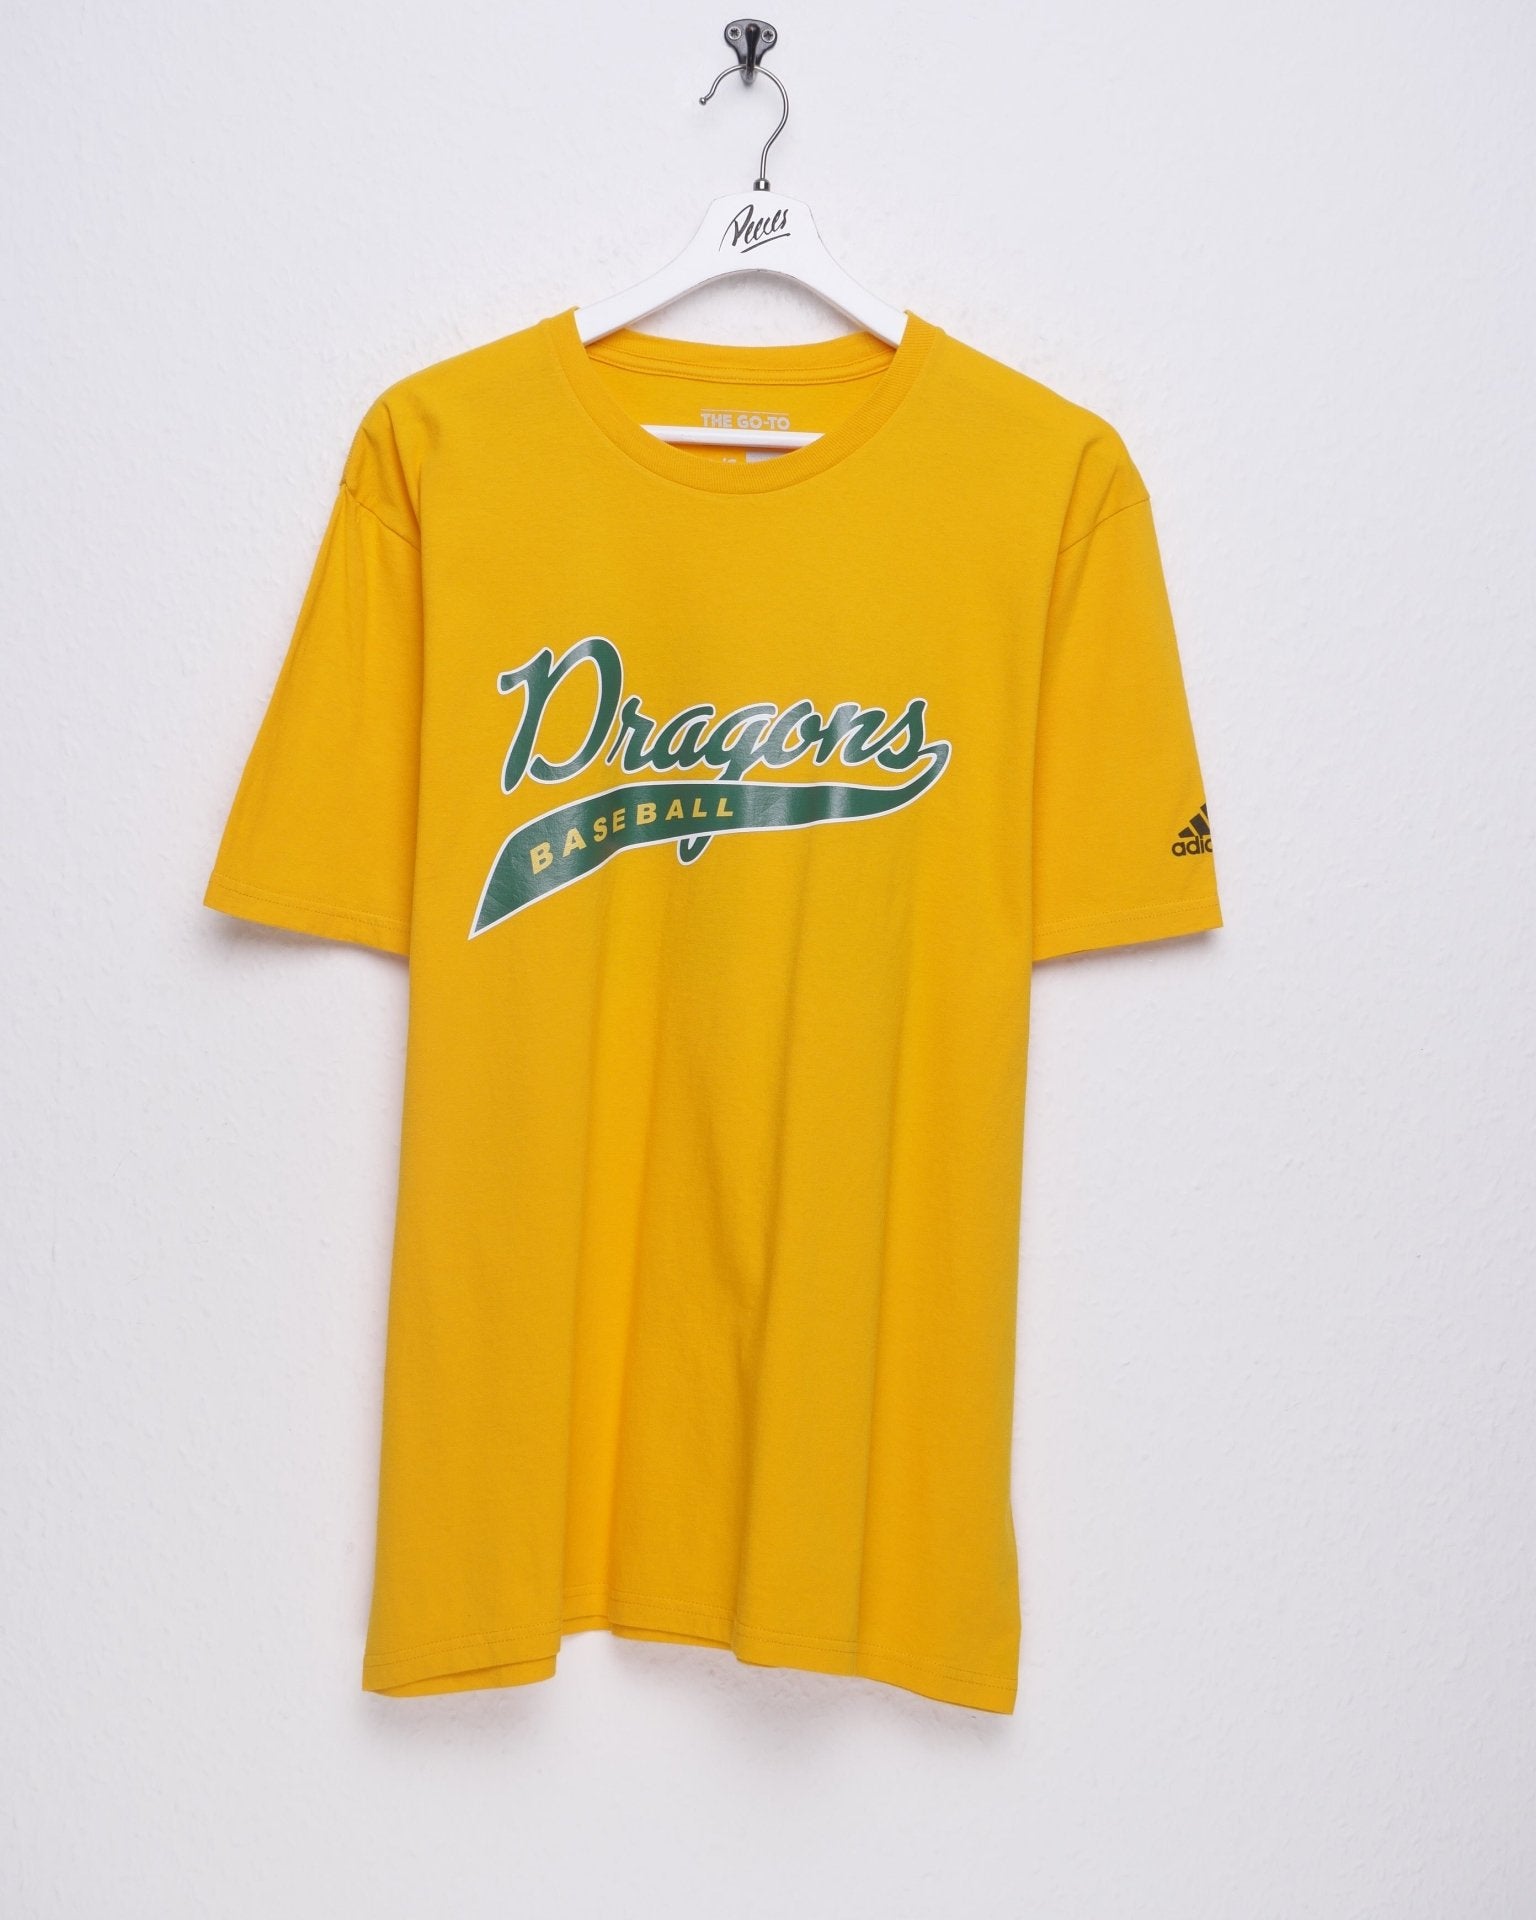 Adidas Baseball Dragons printed Logo yellow Shirt - Peeces